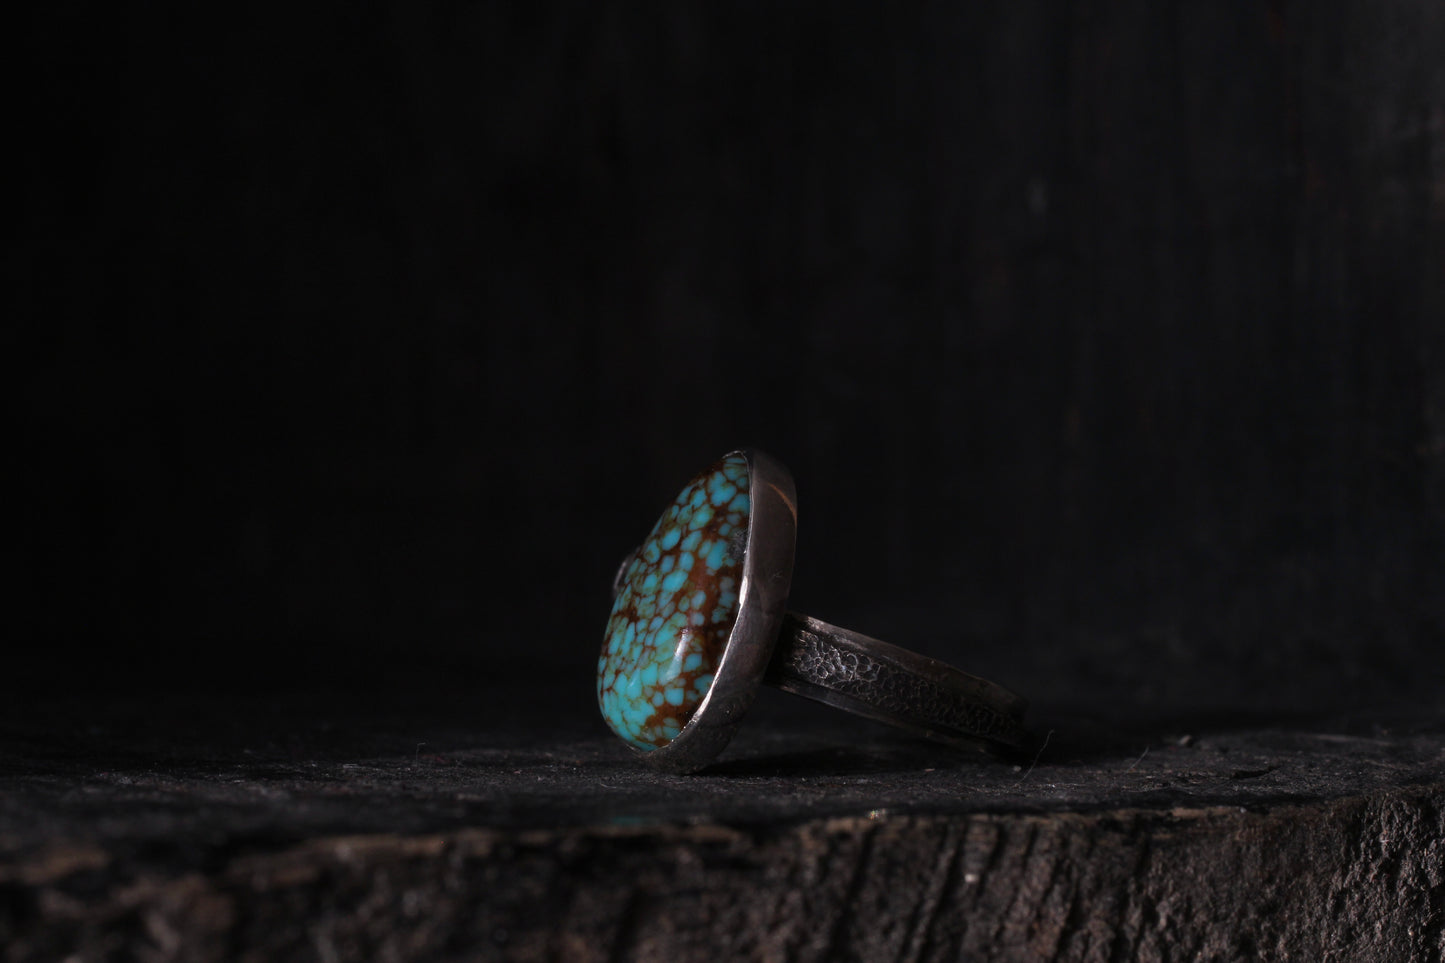 Campitos Turquoise Ring